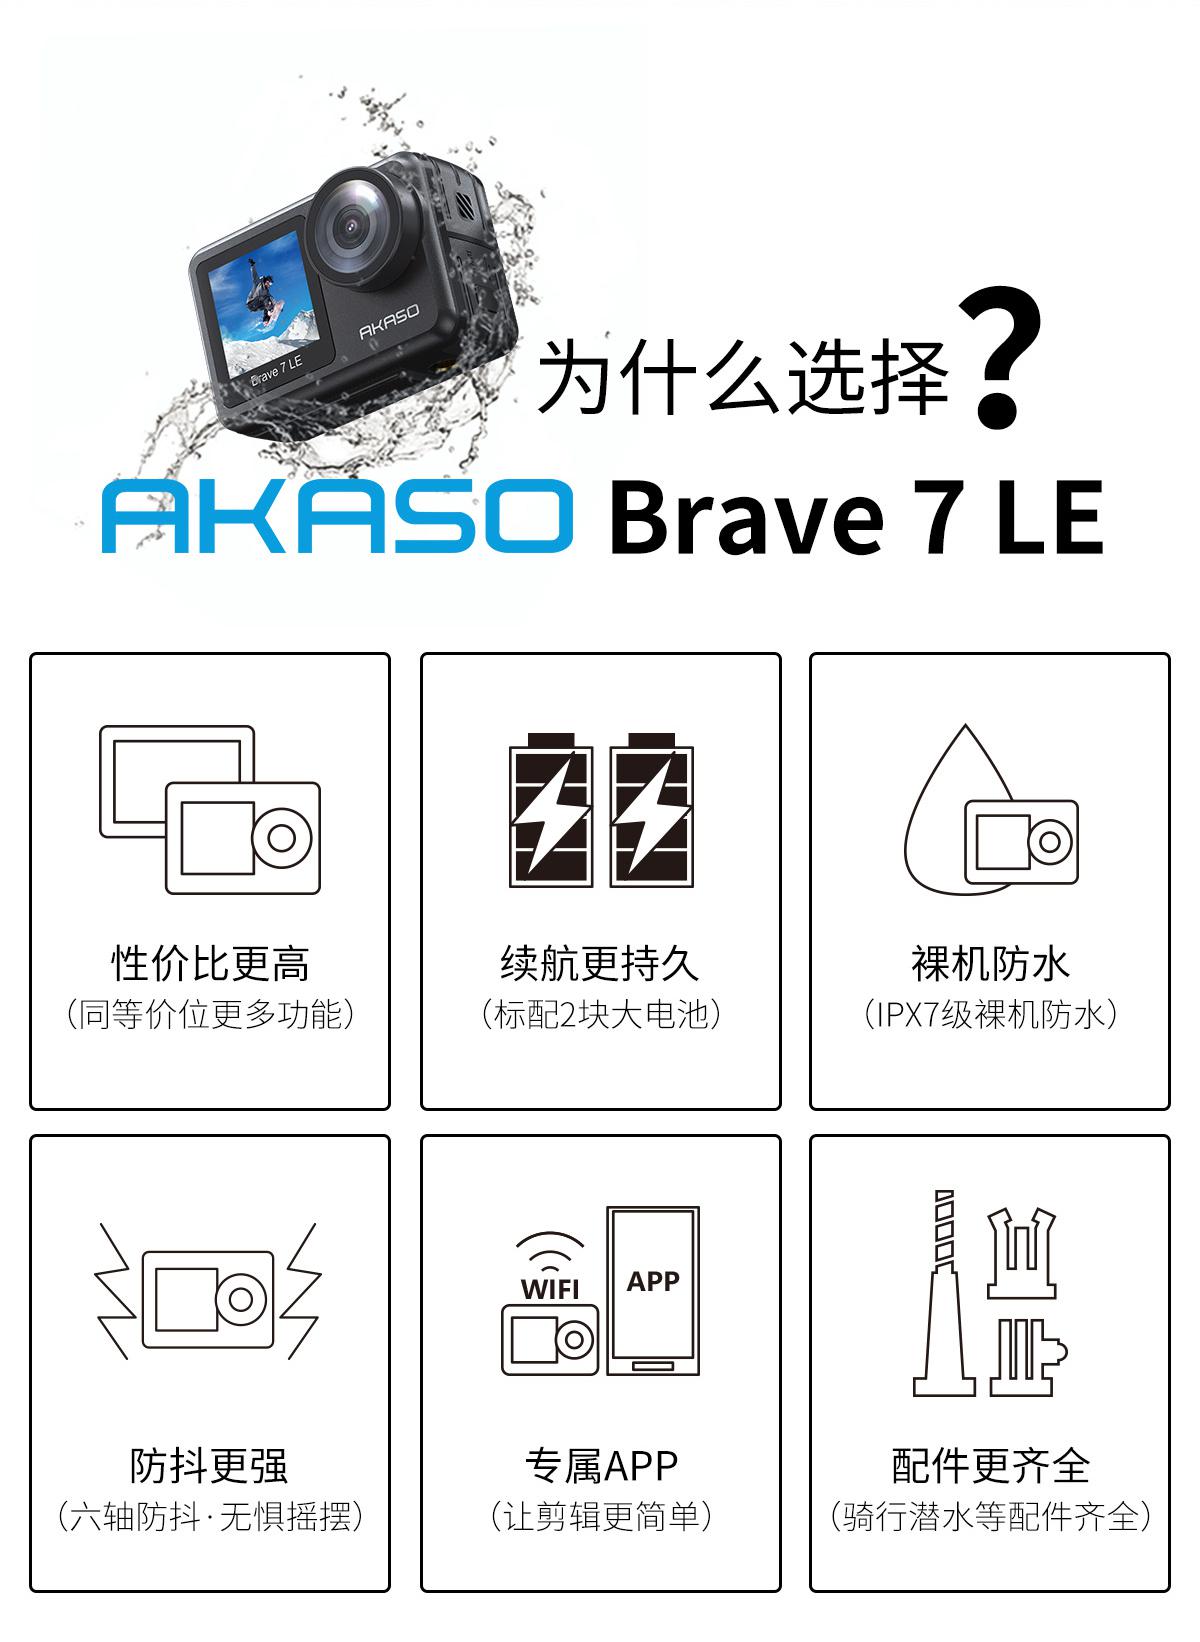 AKASO Brave 7 LE 自拍相机